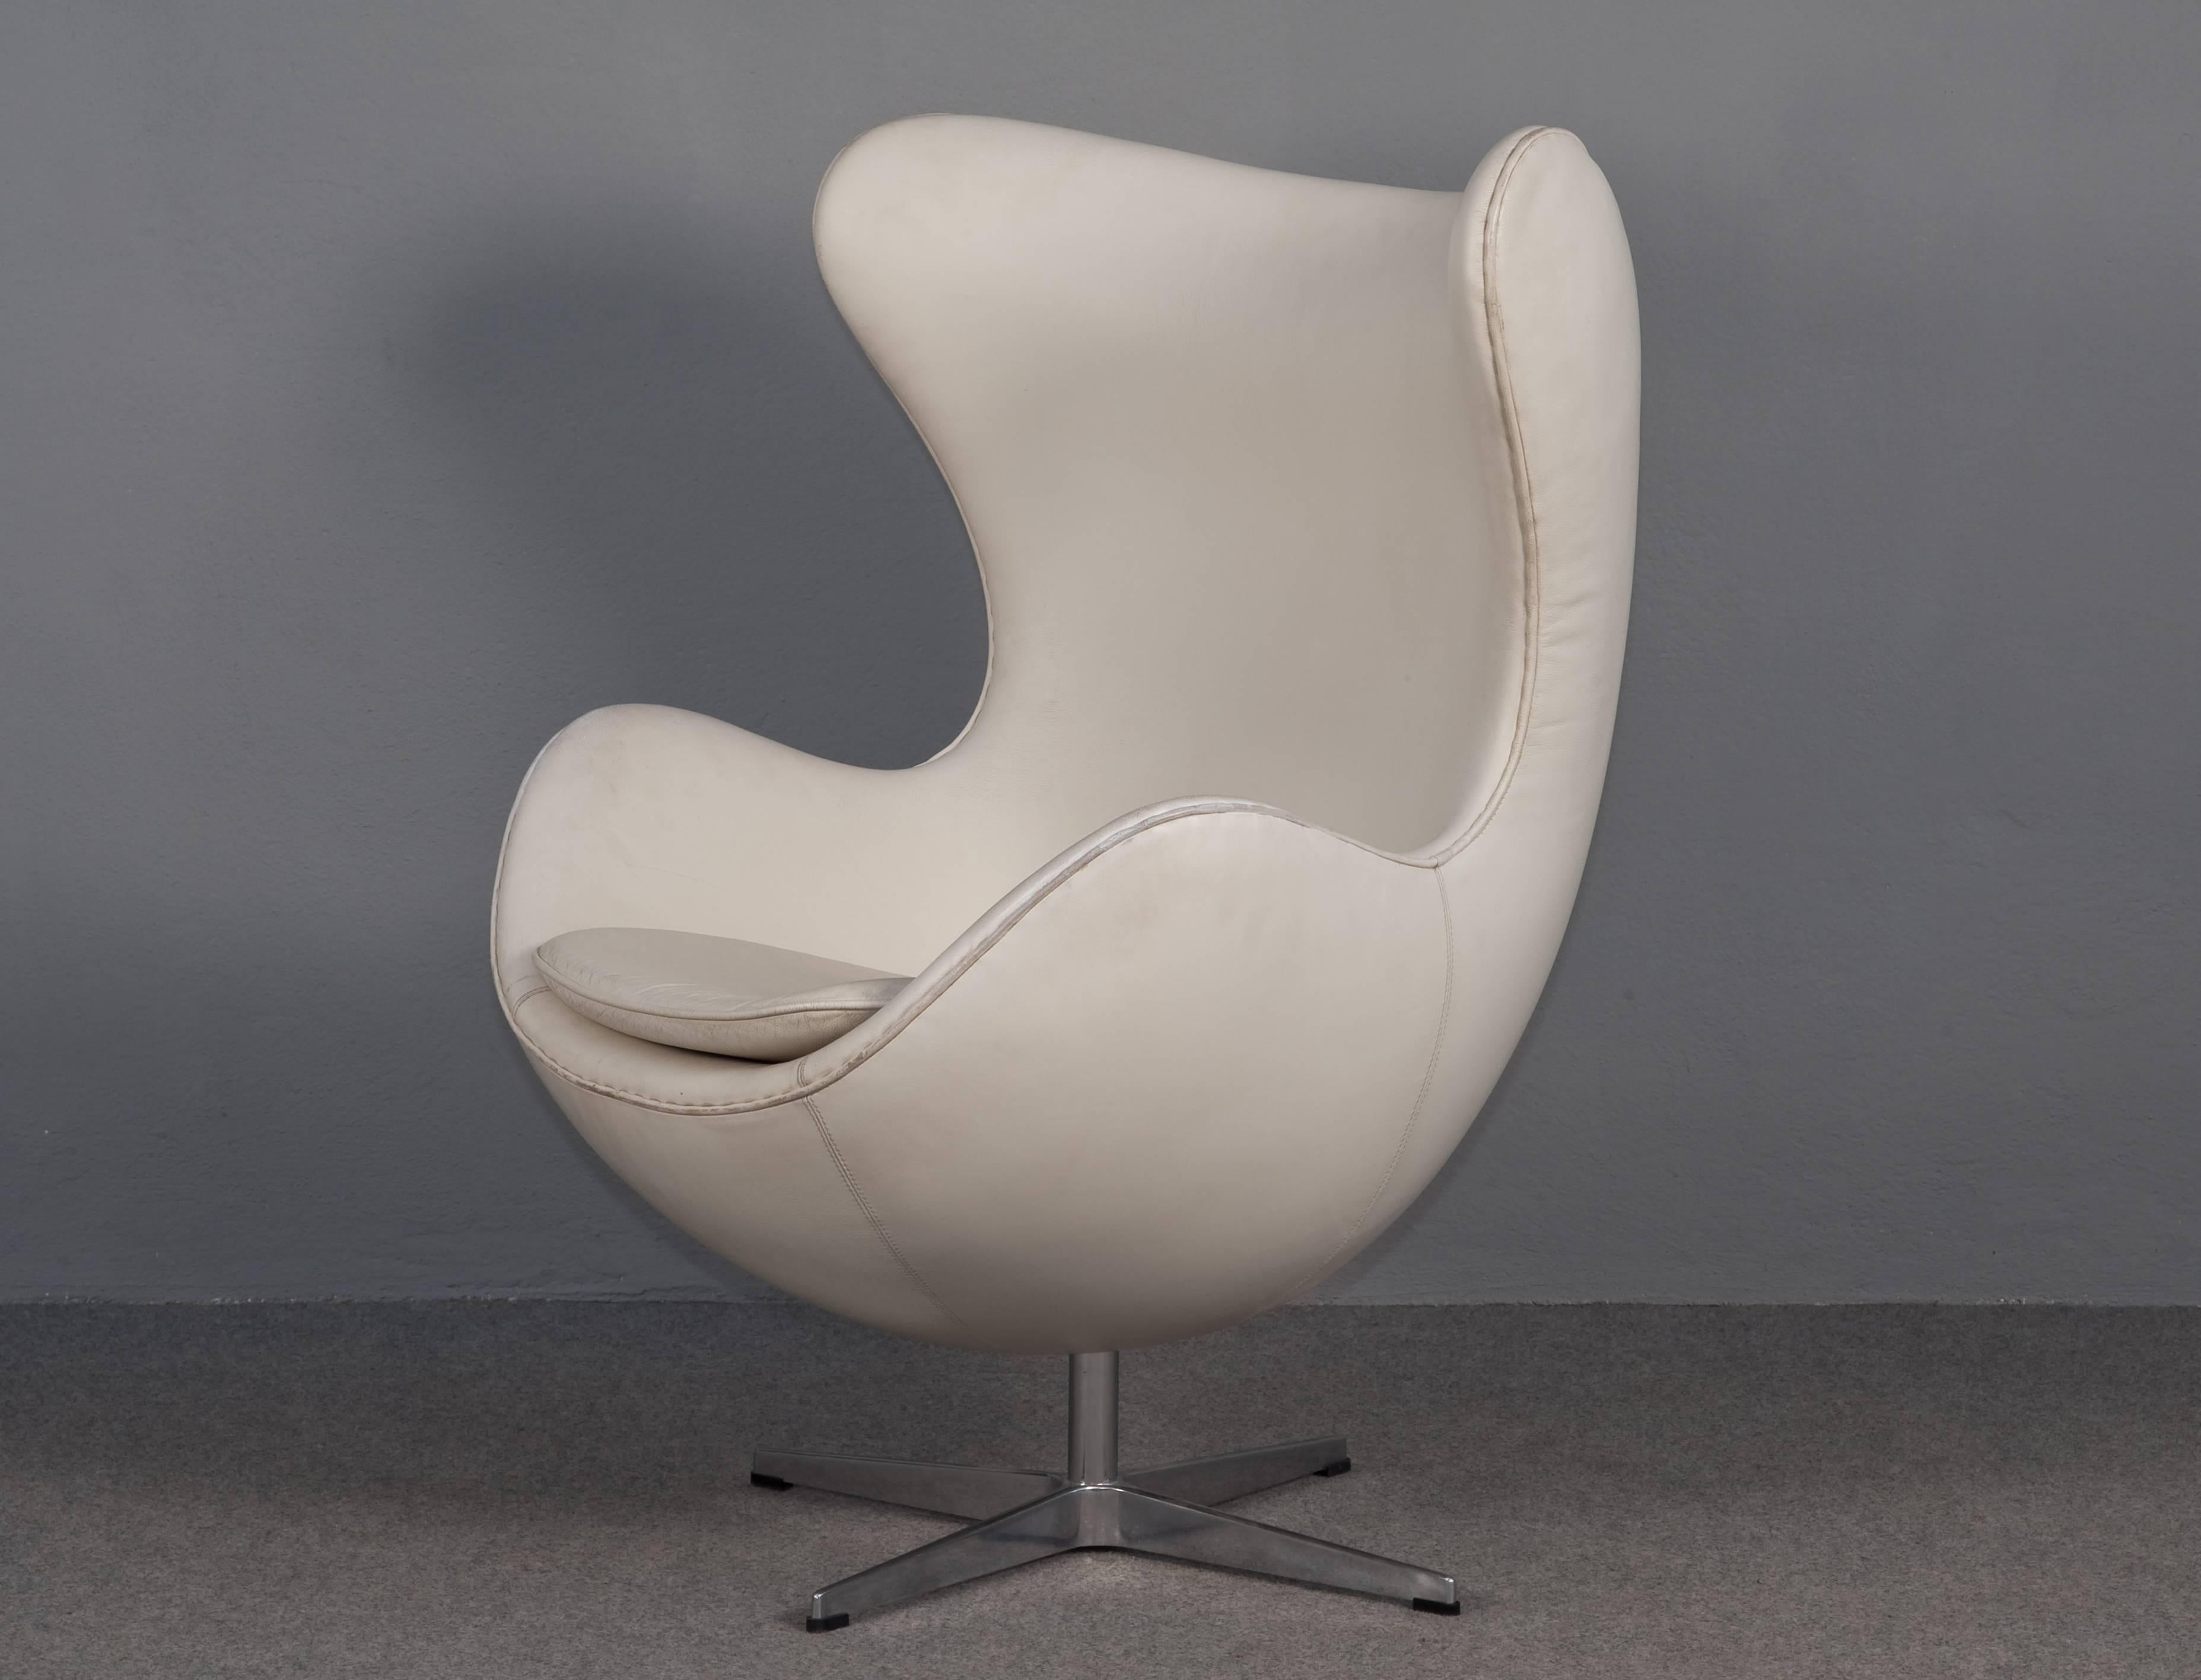 Stunning leather egg chair by Arne Jacobsen, swiveling four-star base.